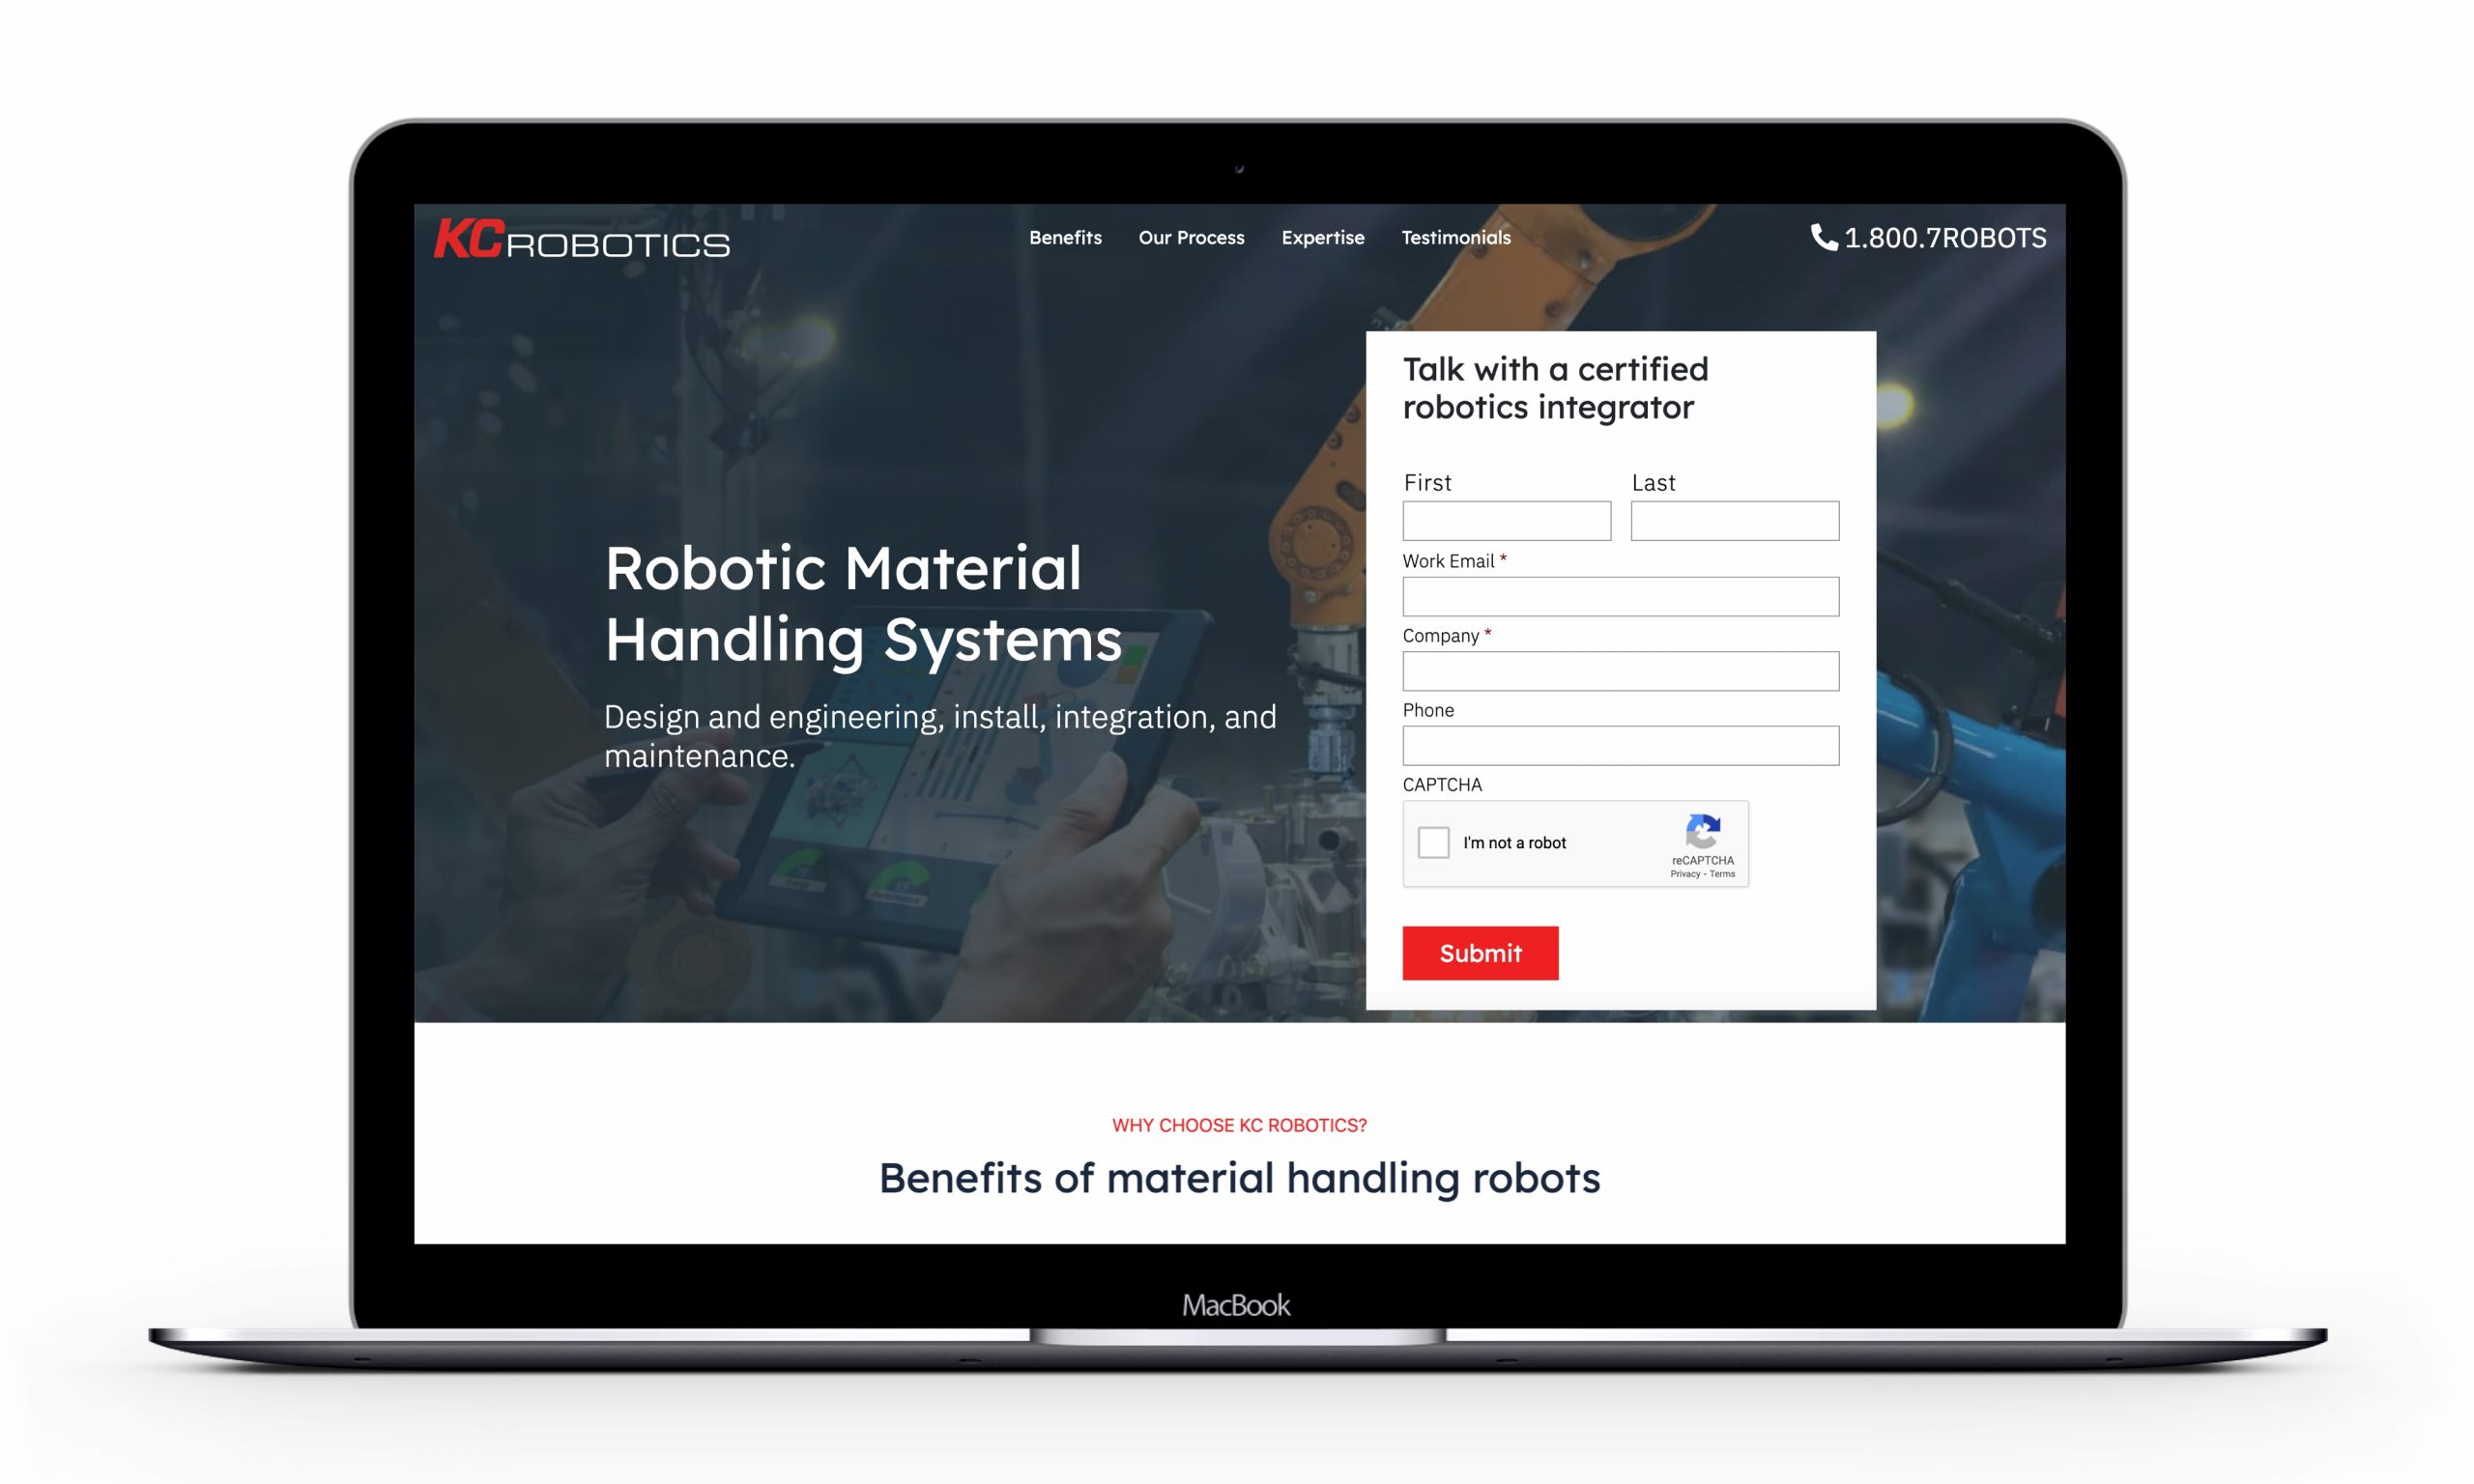 KC Robotics hero in landing page designed to convert